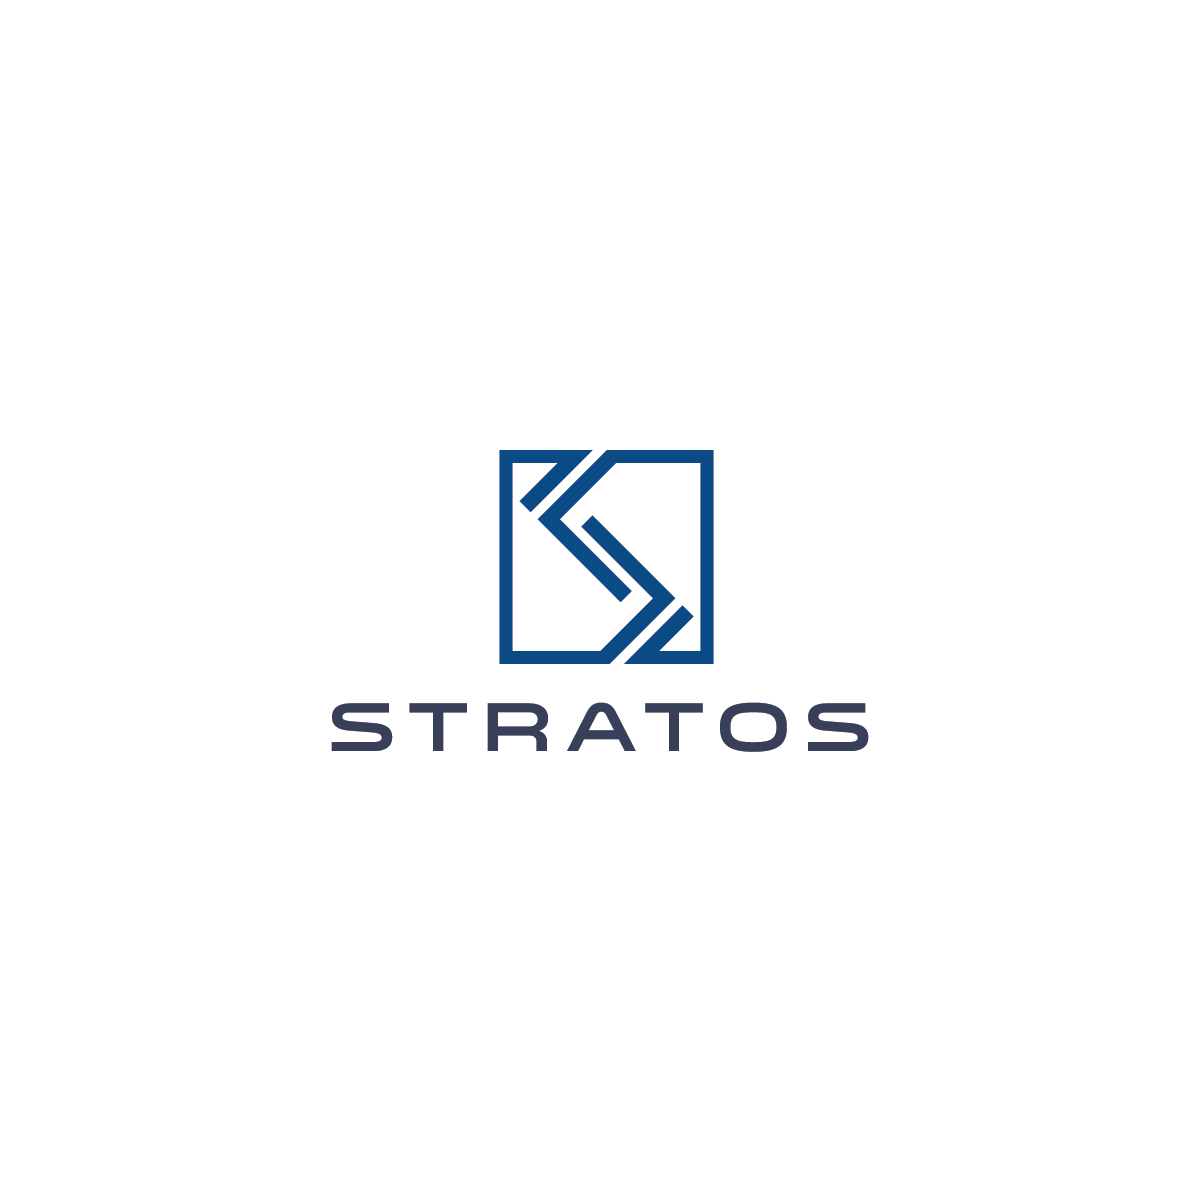 Stratos Logo - Masculine, Bold Logo Design for STRATOS by Mojoto41. Design